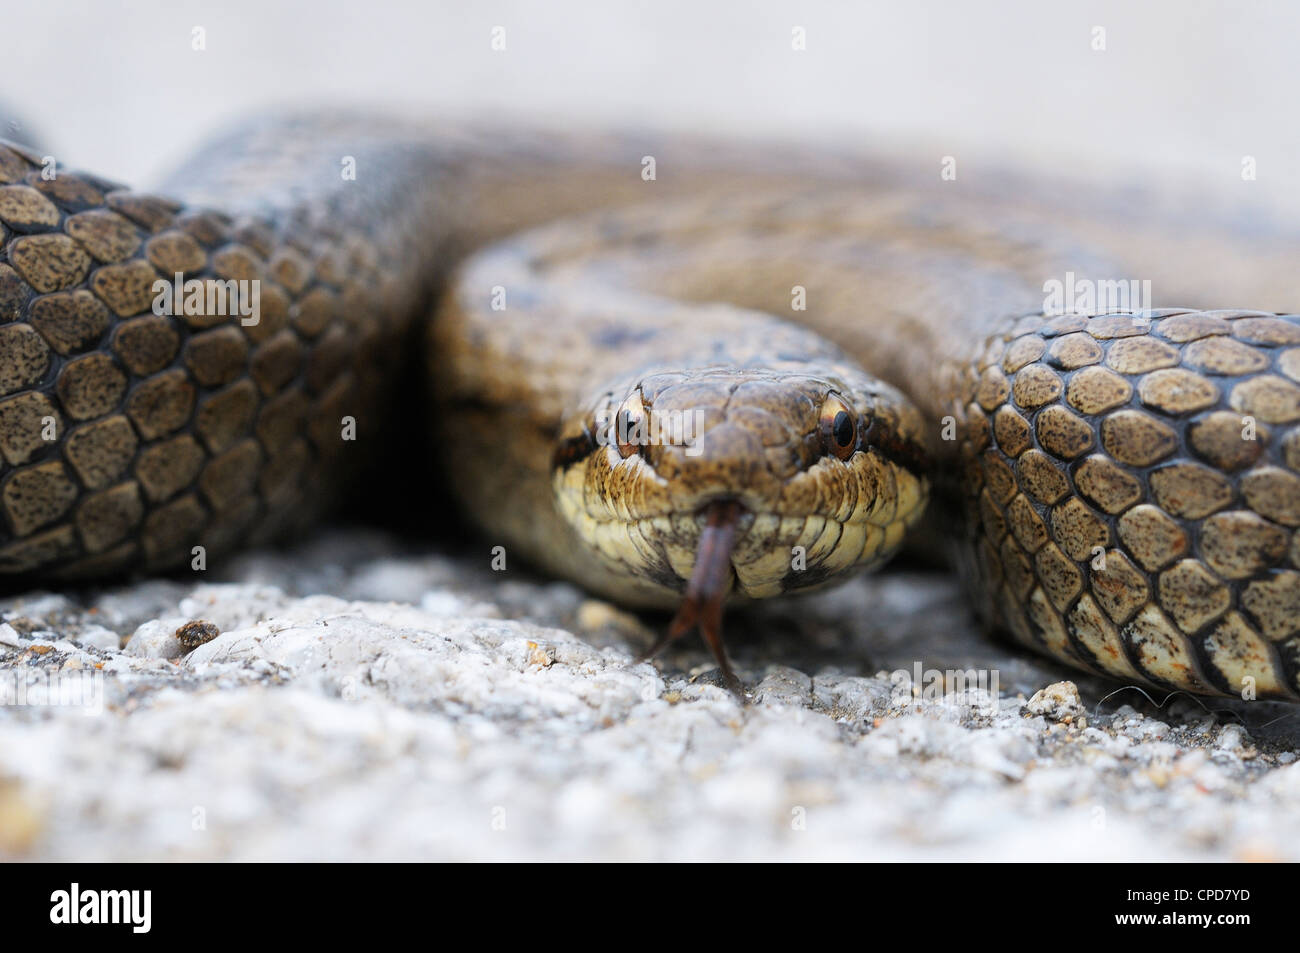 closeup of a Smooth Snake on asphalt Stock Photo